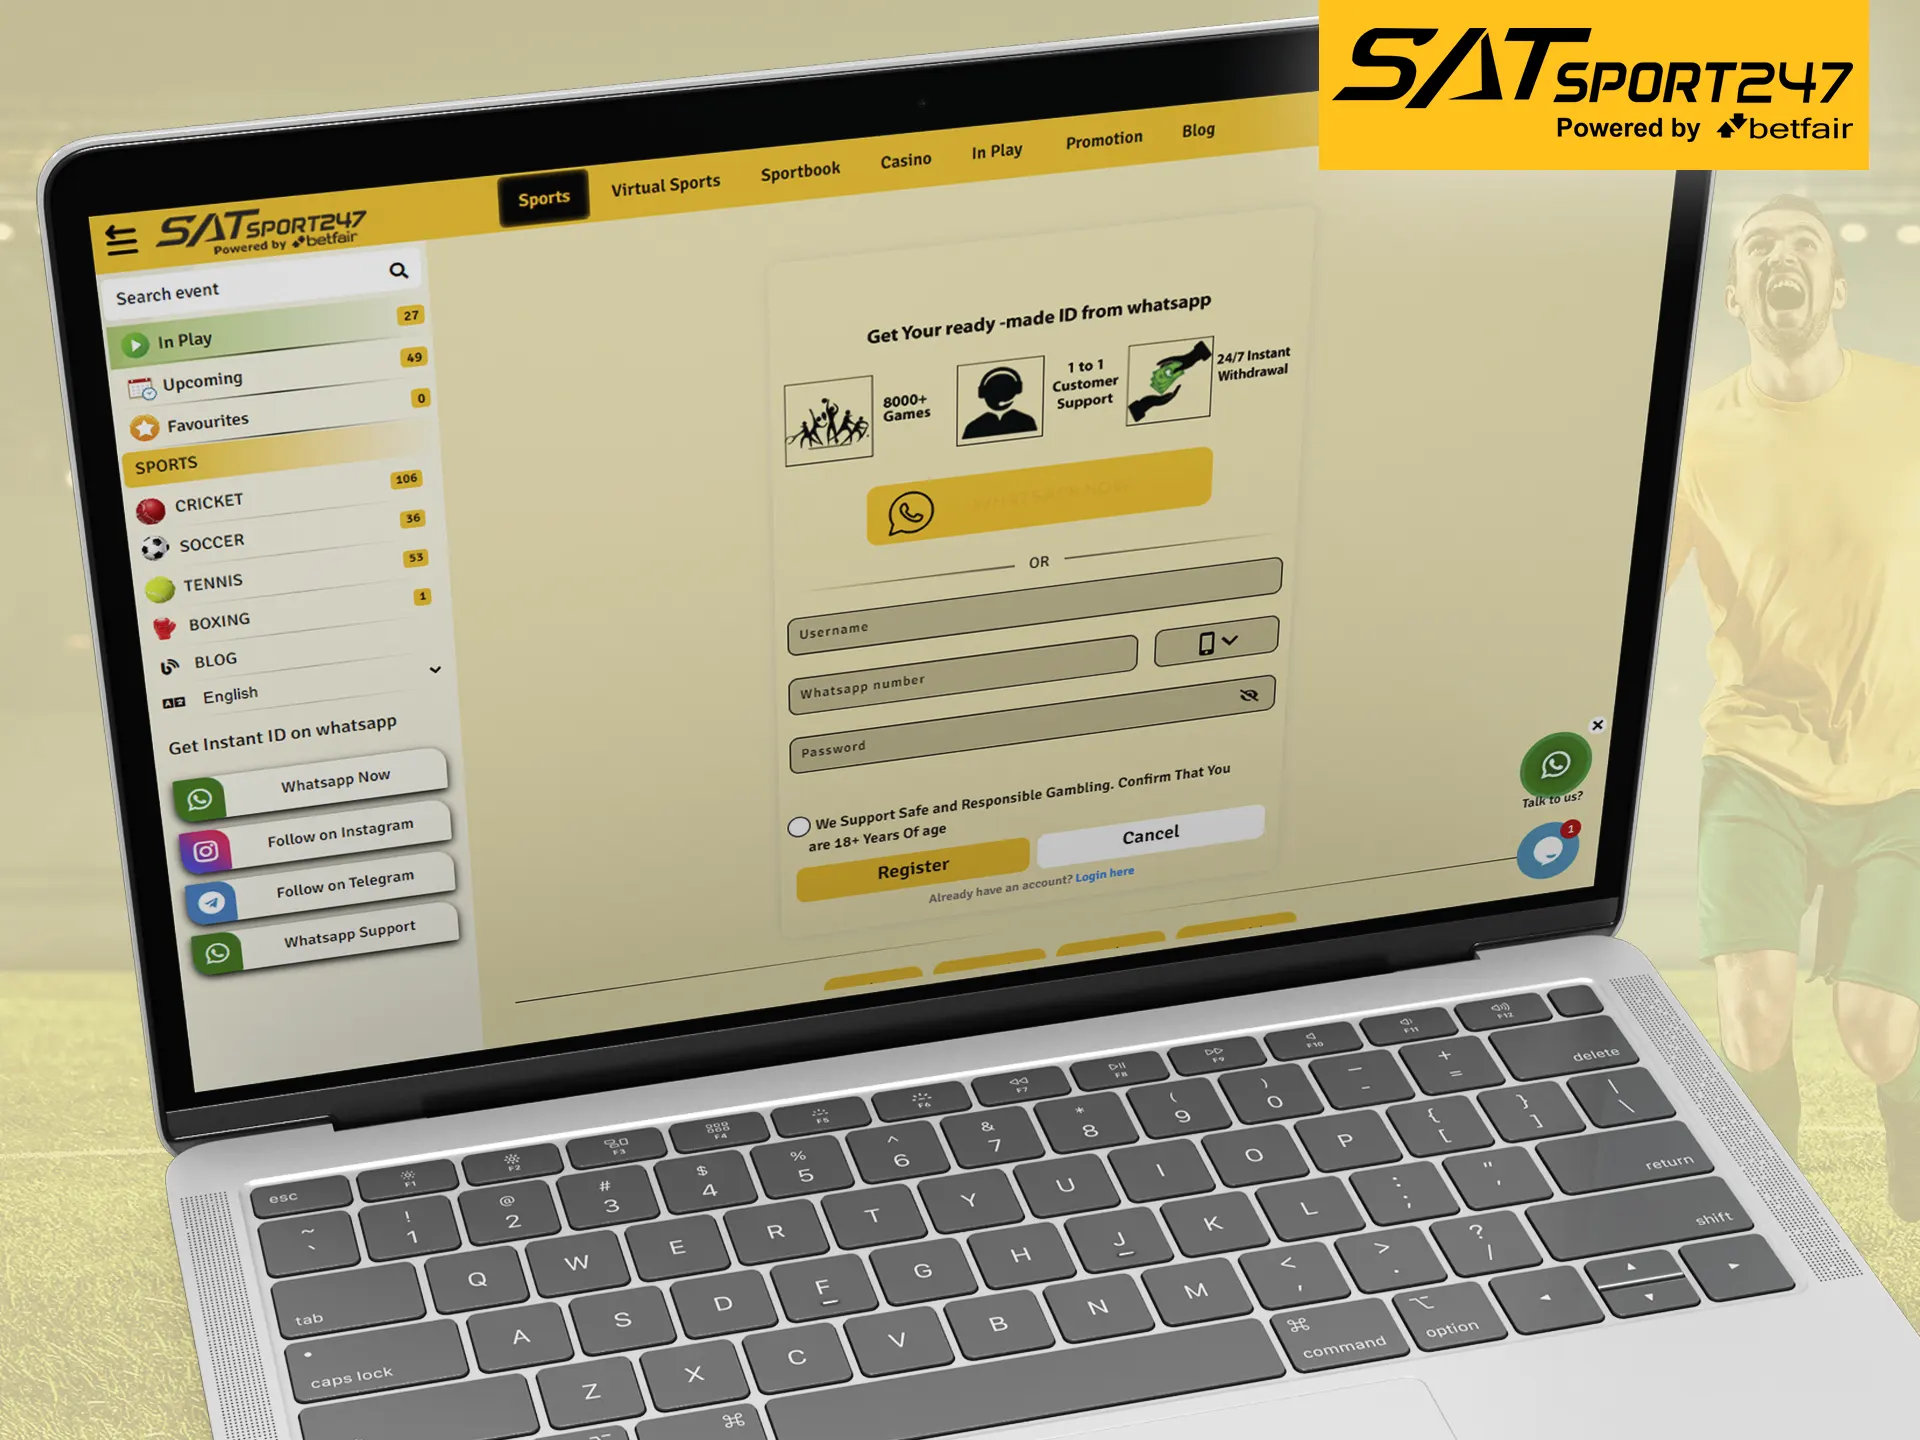 Complete a simple registration process at Satsport247.